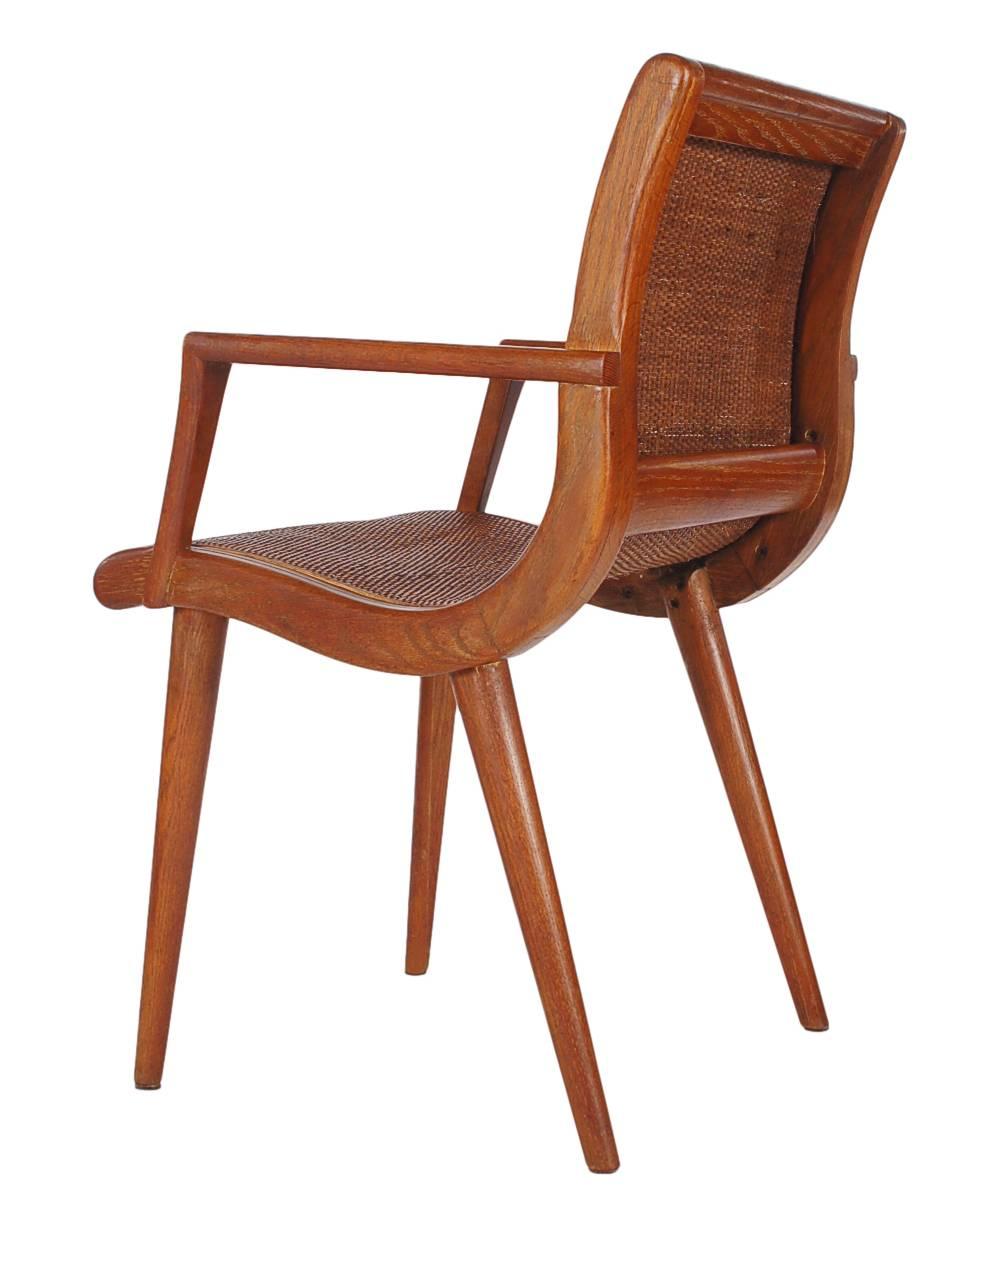 Mid-20th Century Mid-Century Modern Cane and Oak Danish Modern Style Armchairs